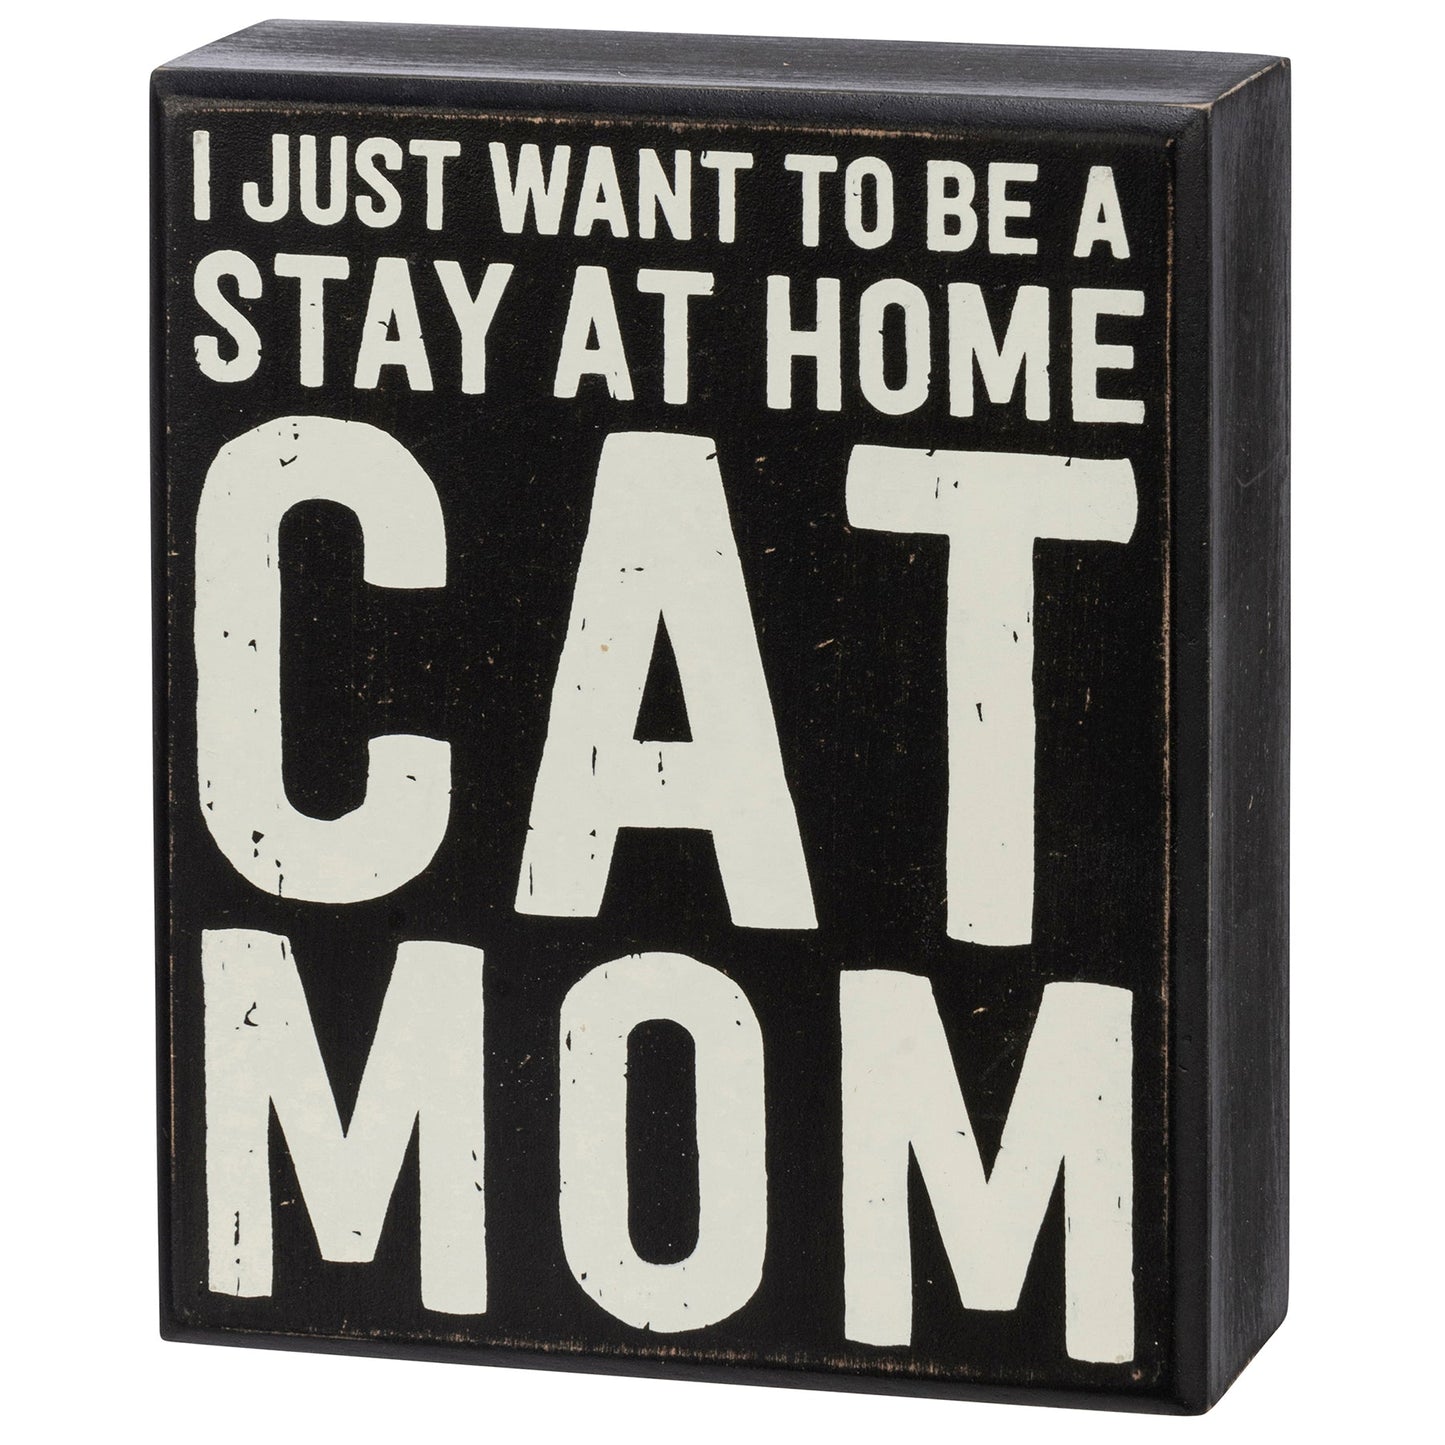 Cat Mom Gift Set